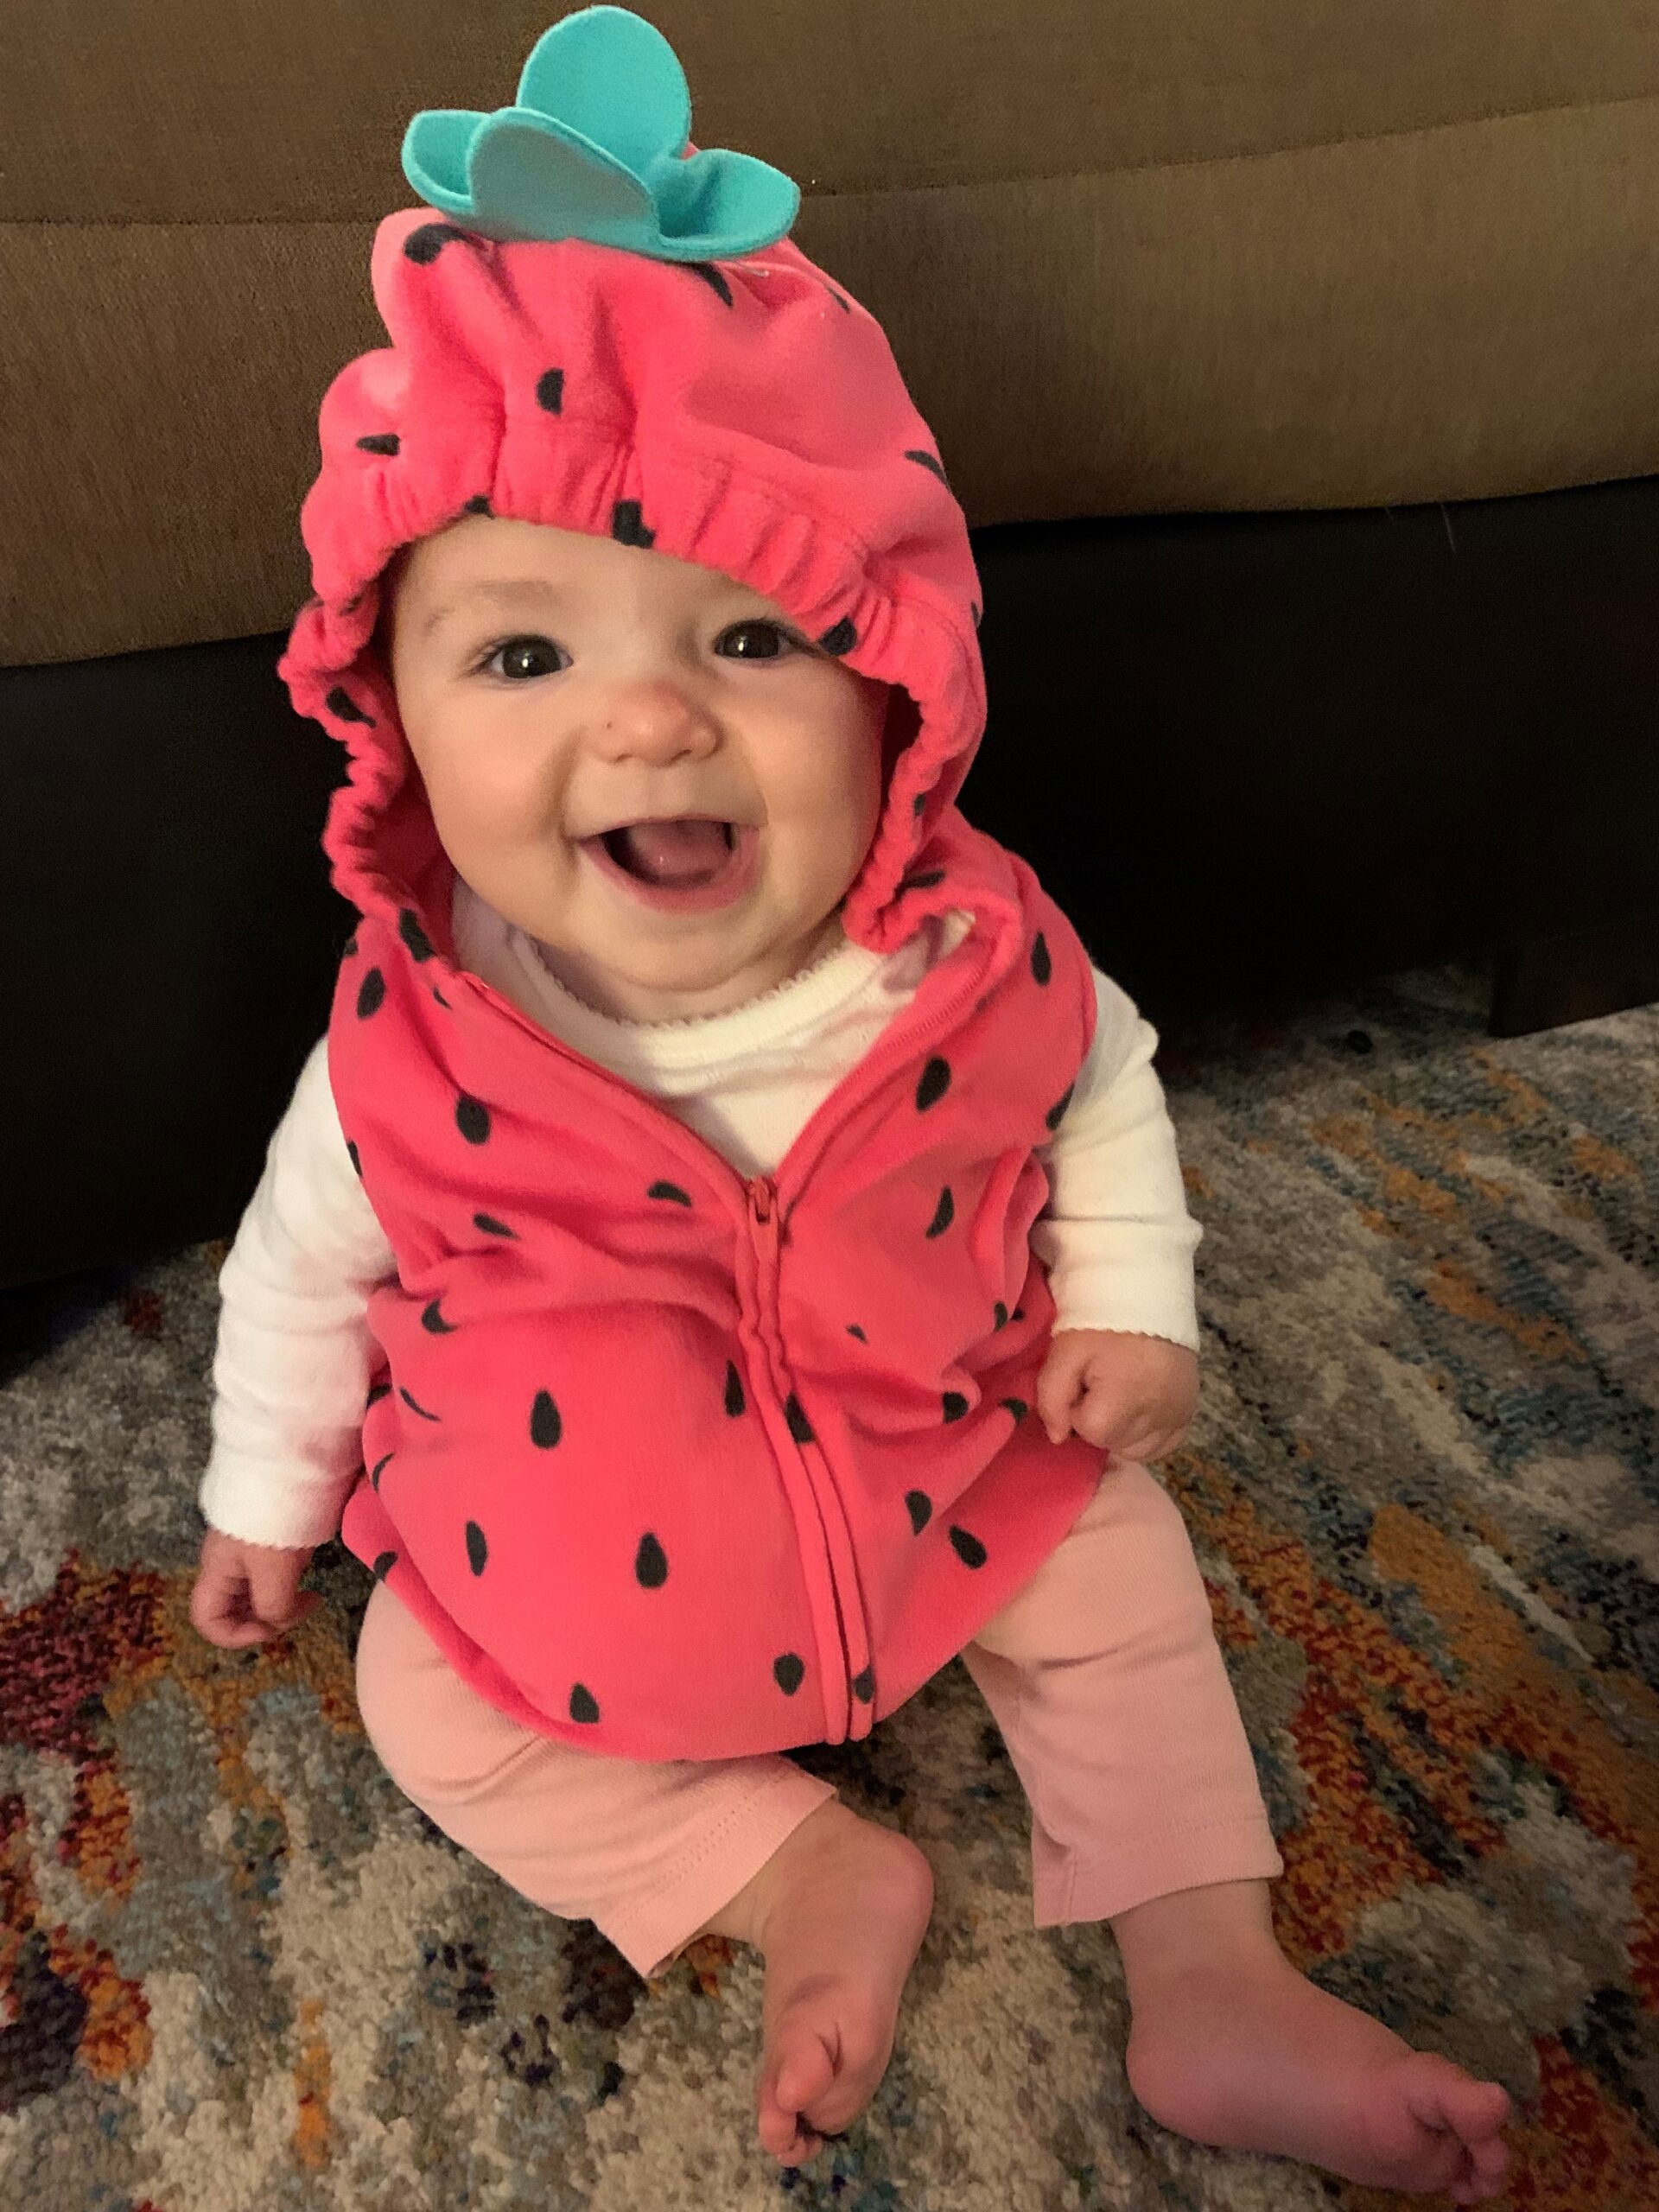 Lauren M.'s daughter, Aria, as a happy little berry.